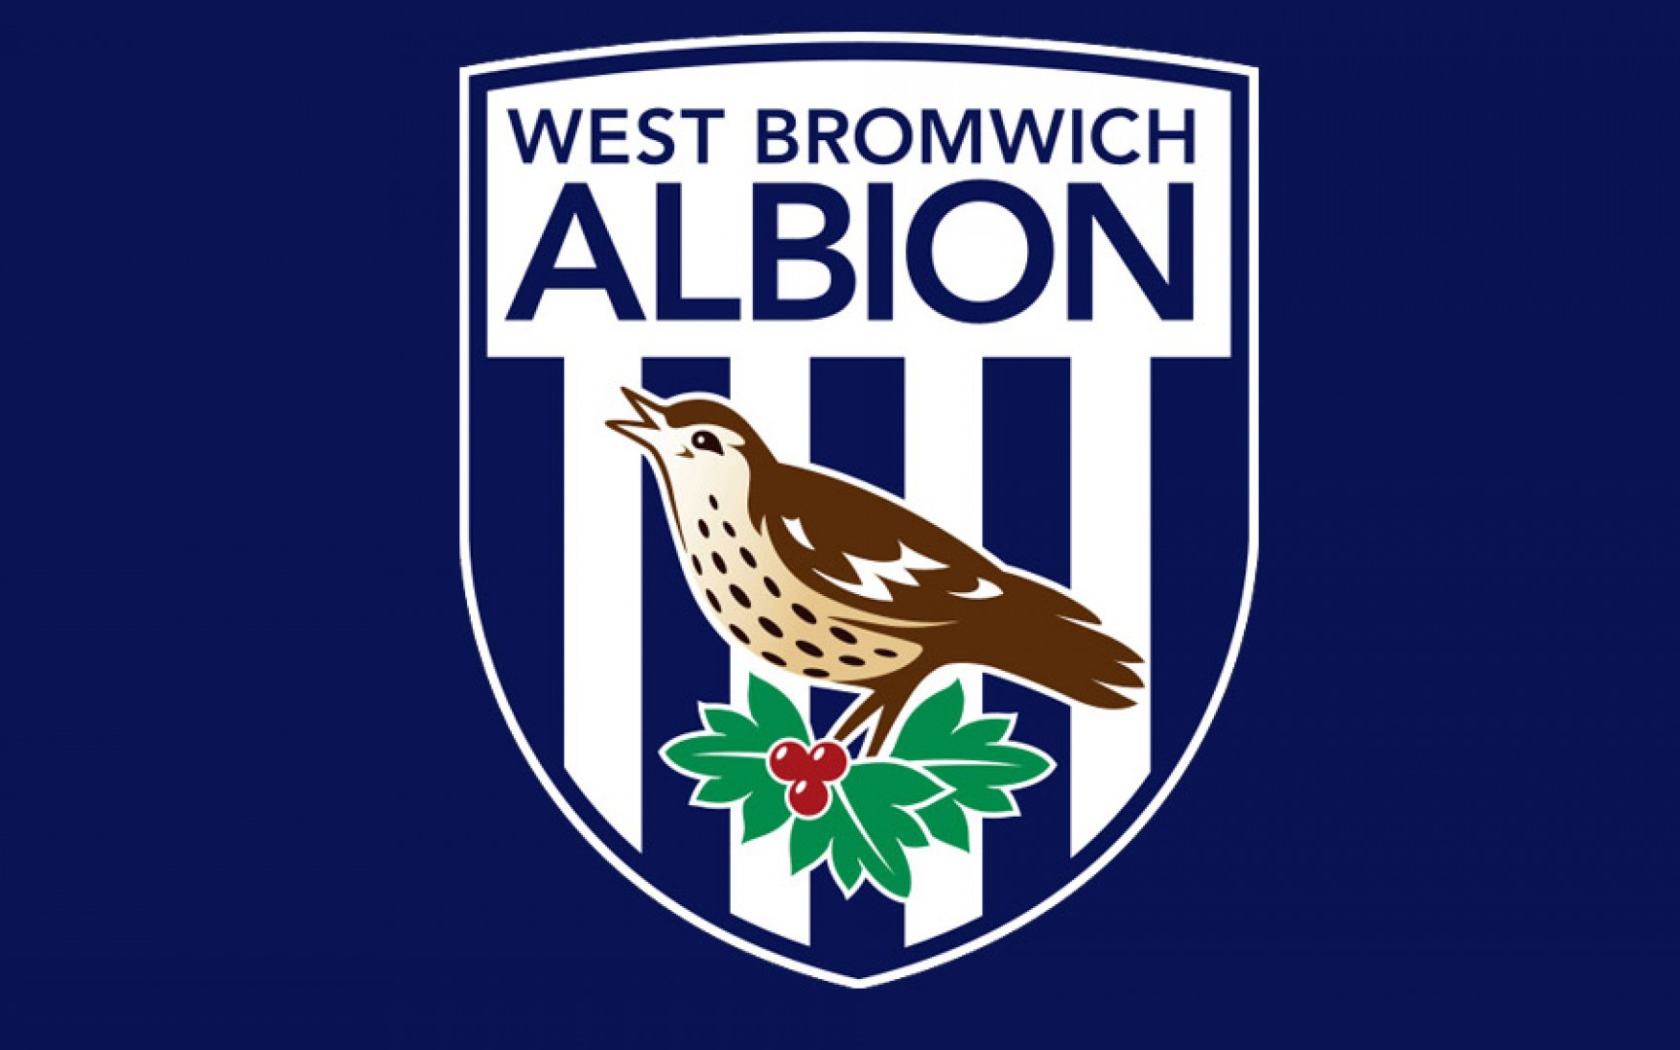 Football club england West Bromwich Albion